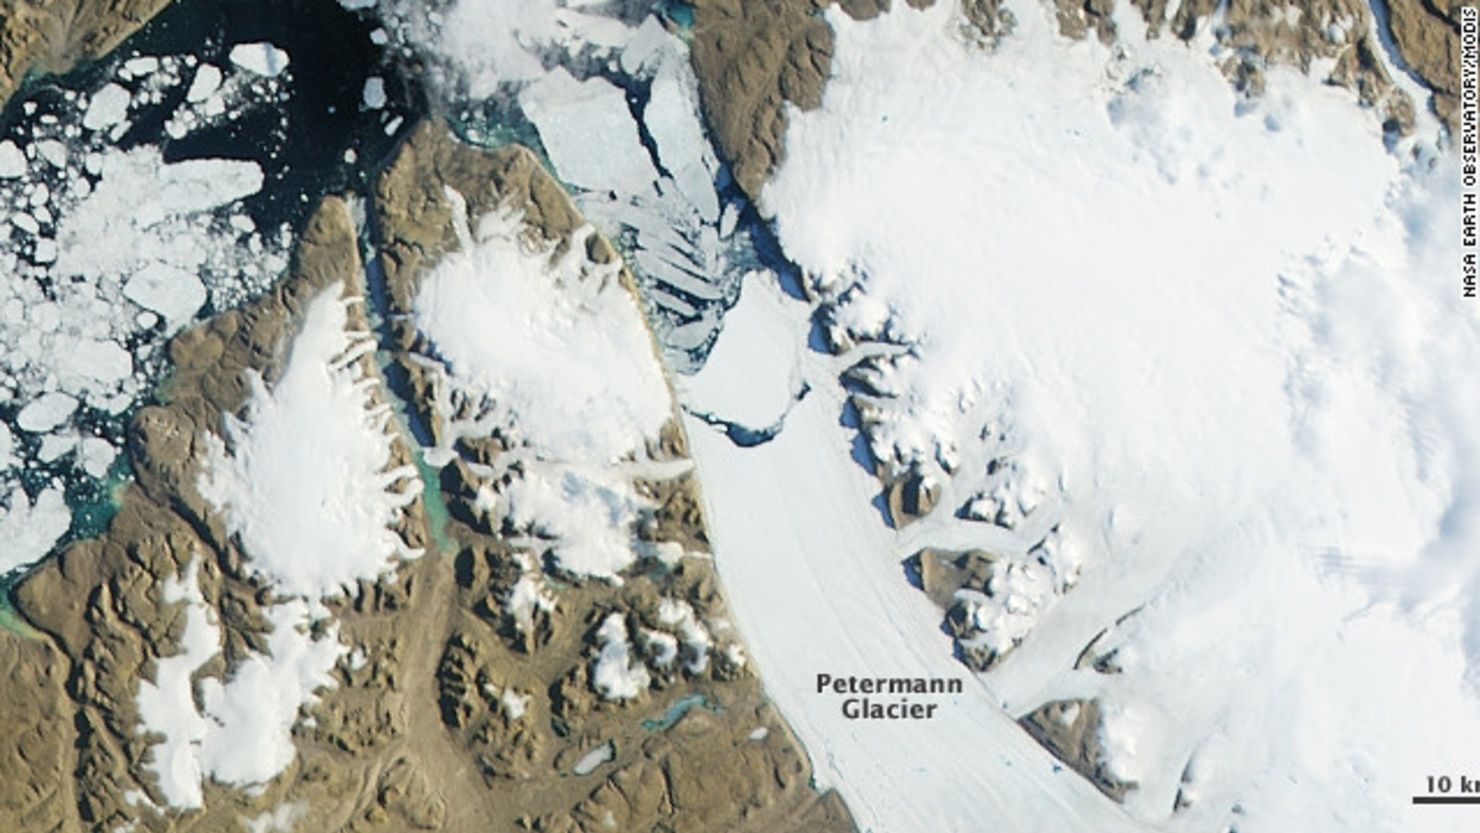 CNNE 5edff0b8 - 120718102640-petermann-glacier-after-calving-story-top